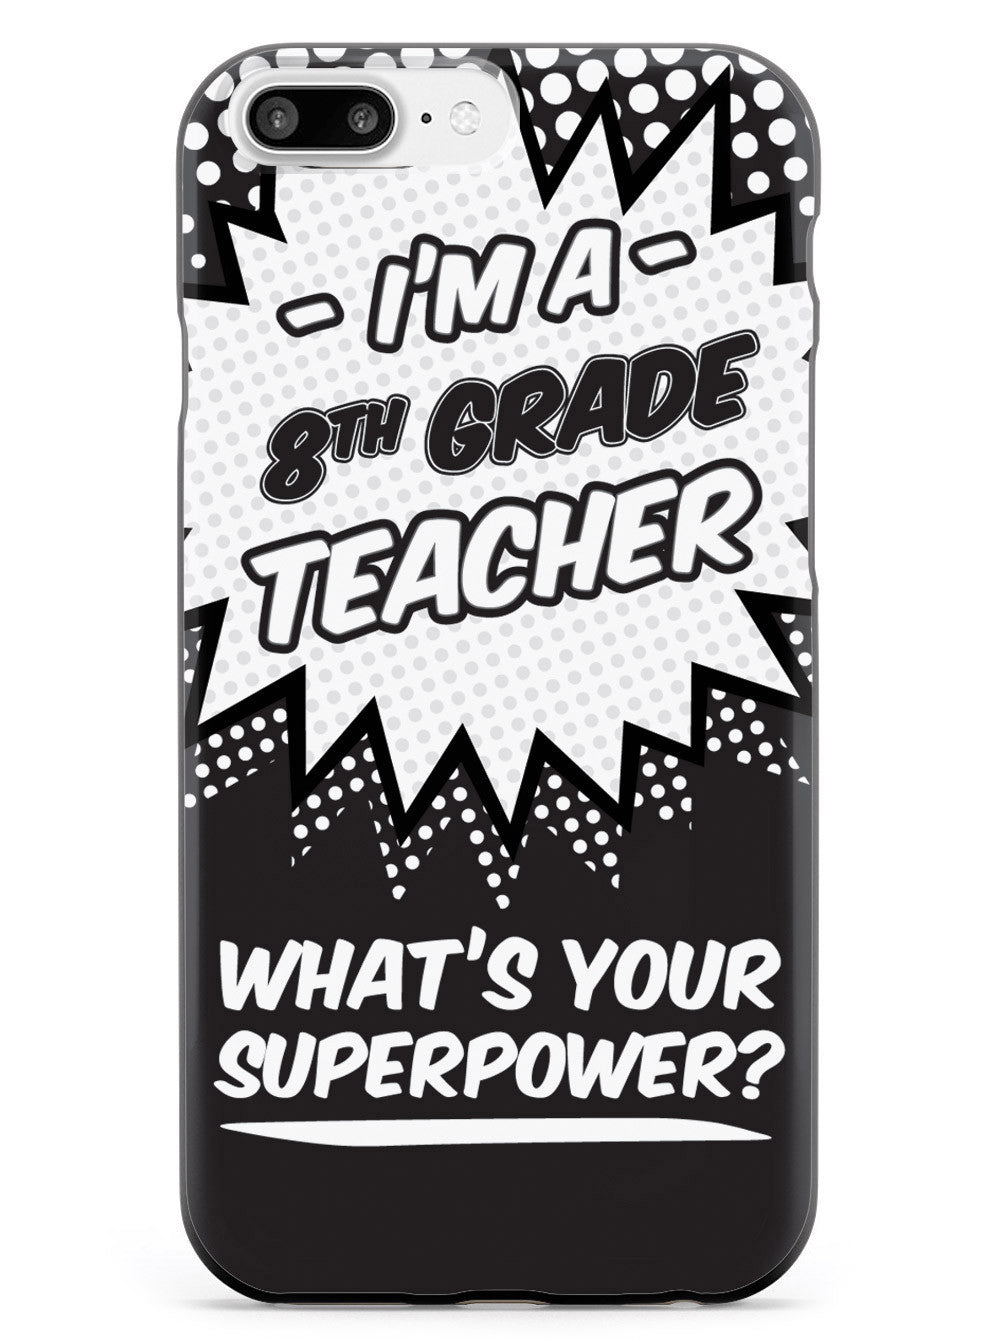 8th Grade Teacher - What's Your Superpower? Case